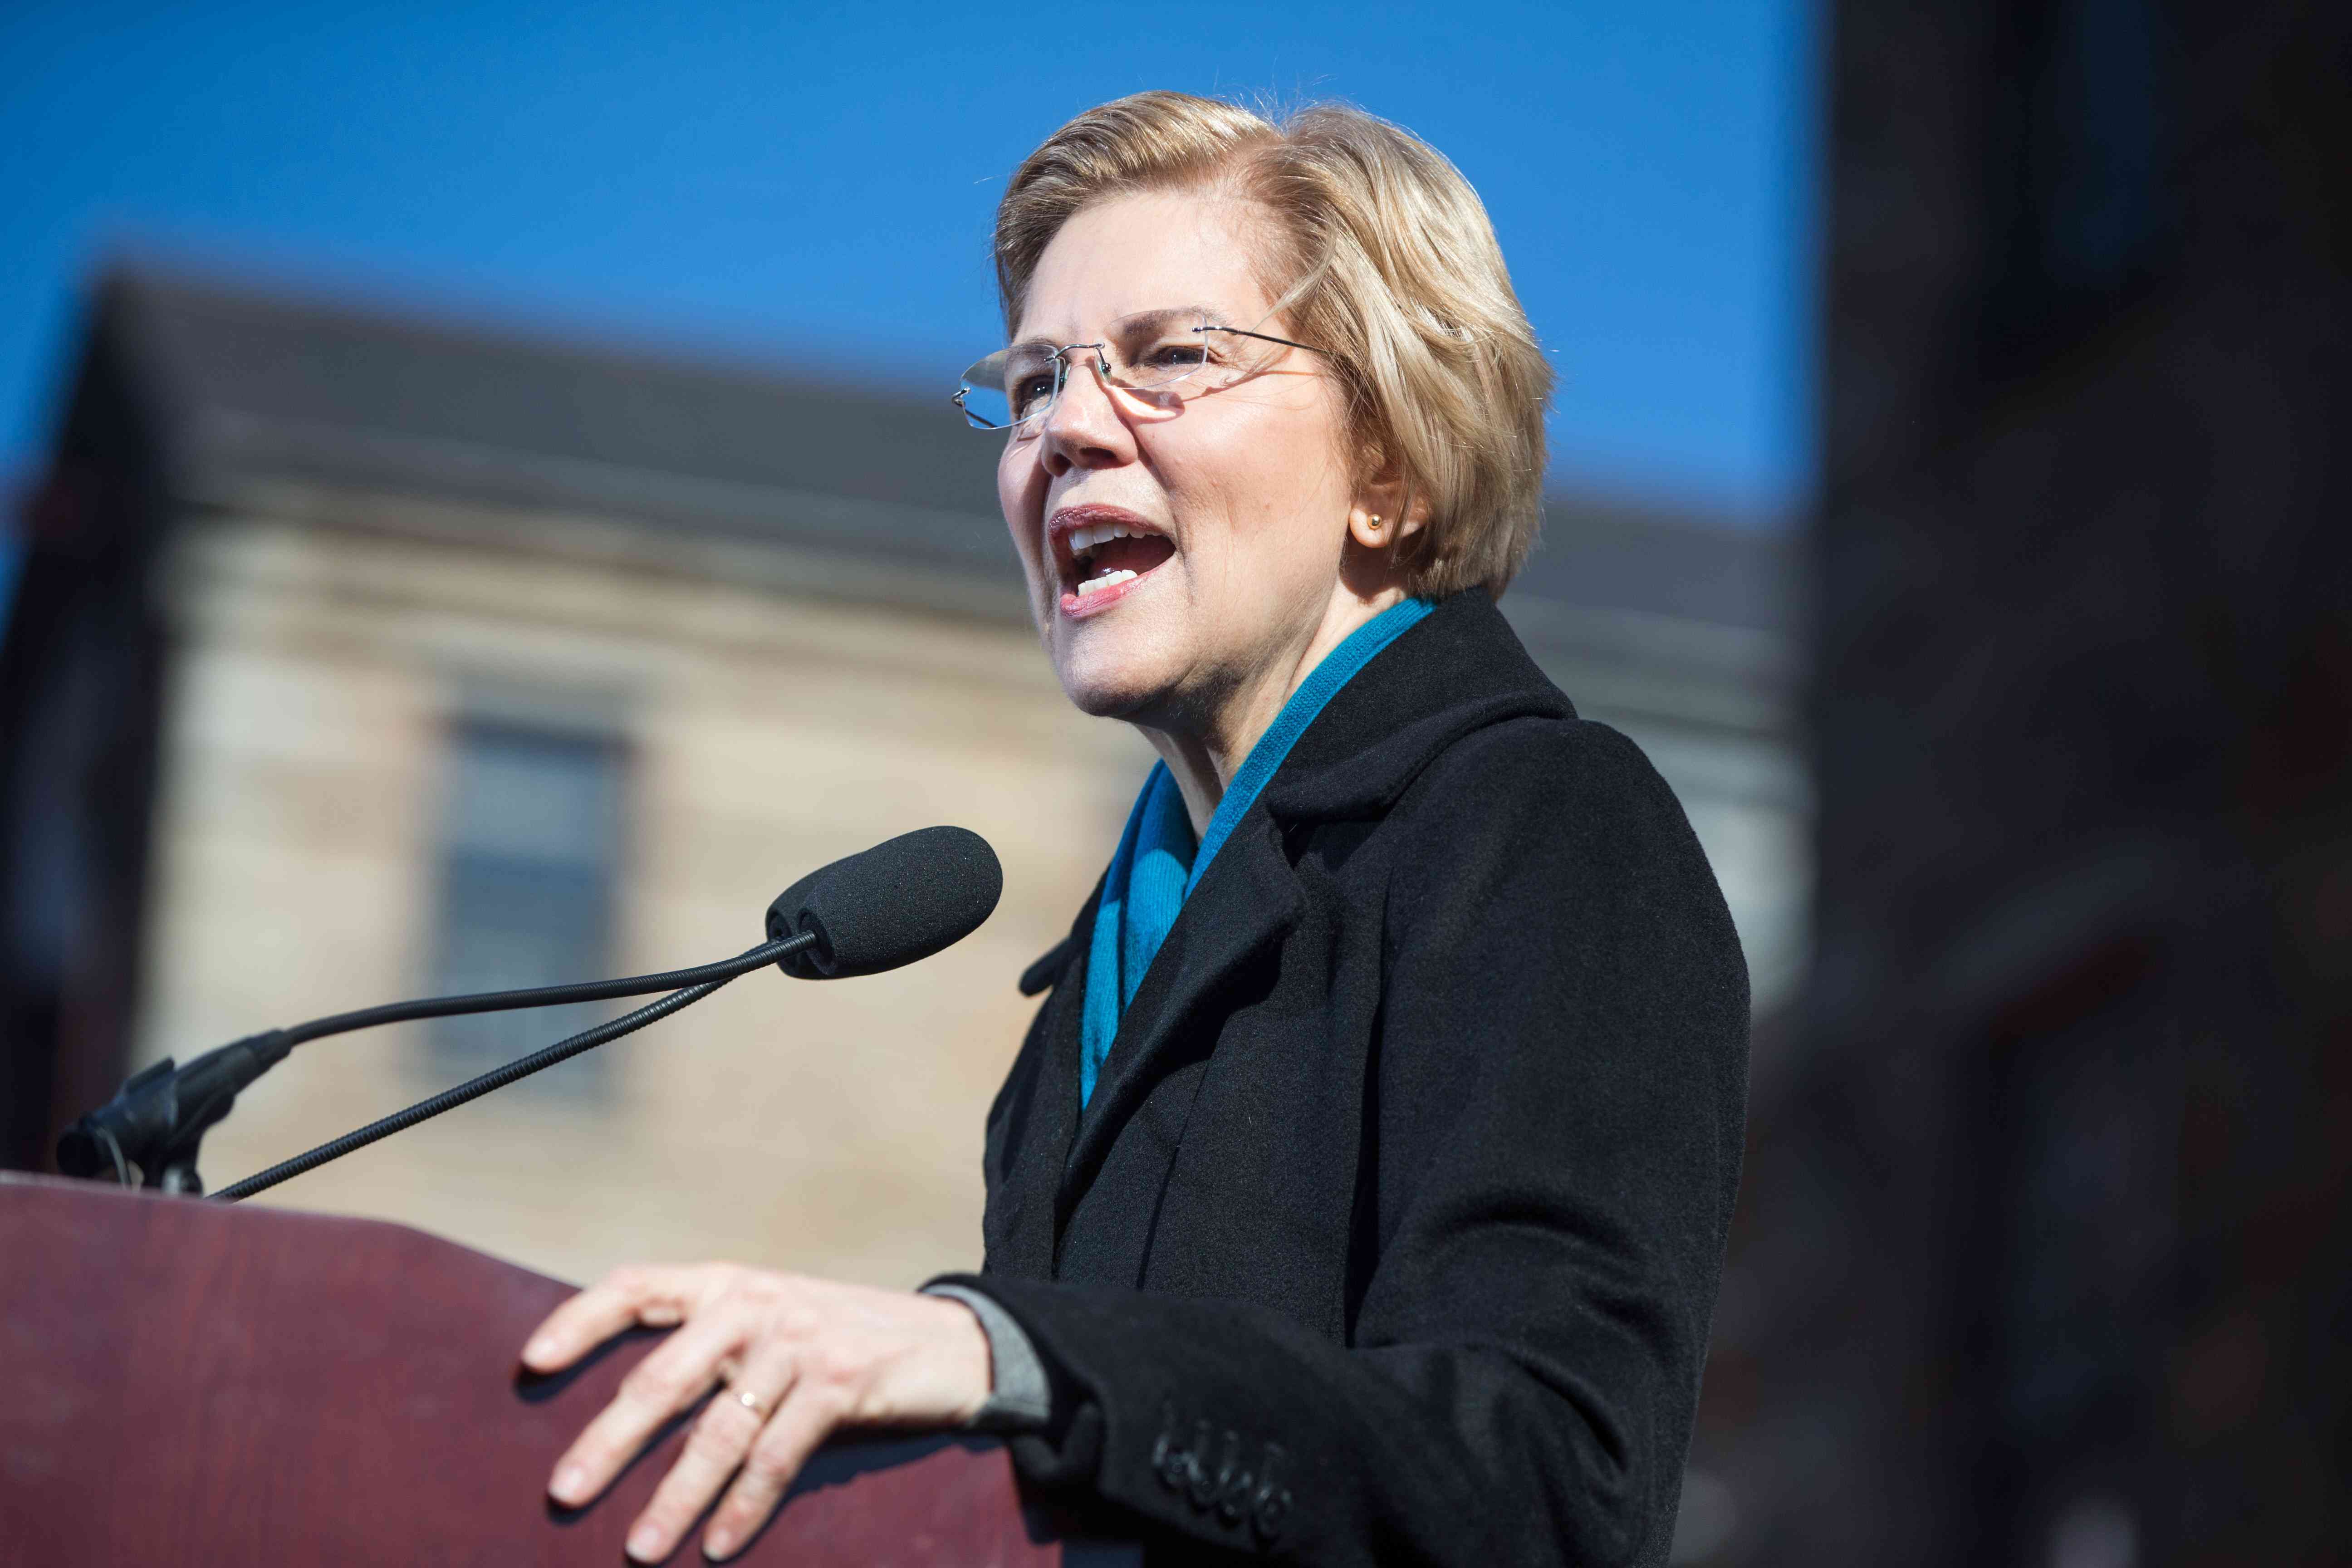 Senator Warren speaking at a podium